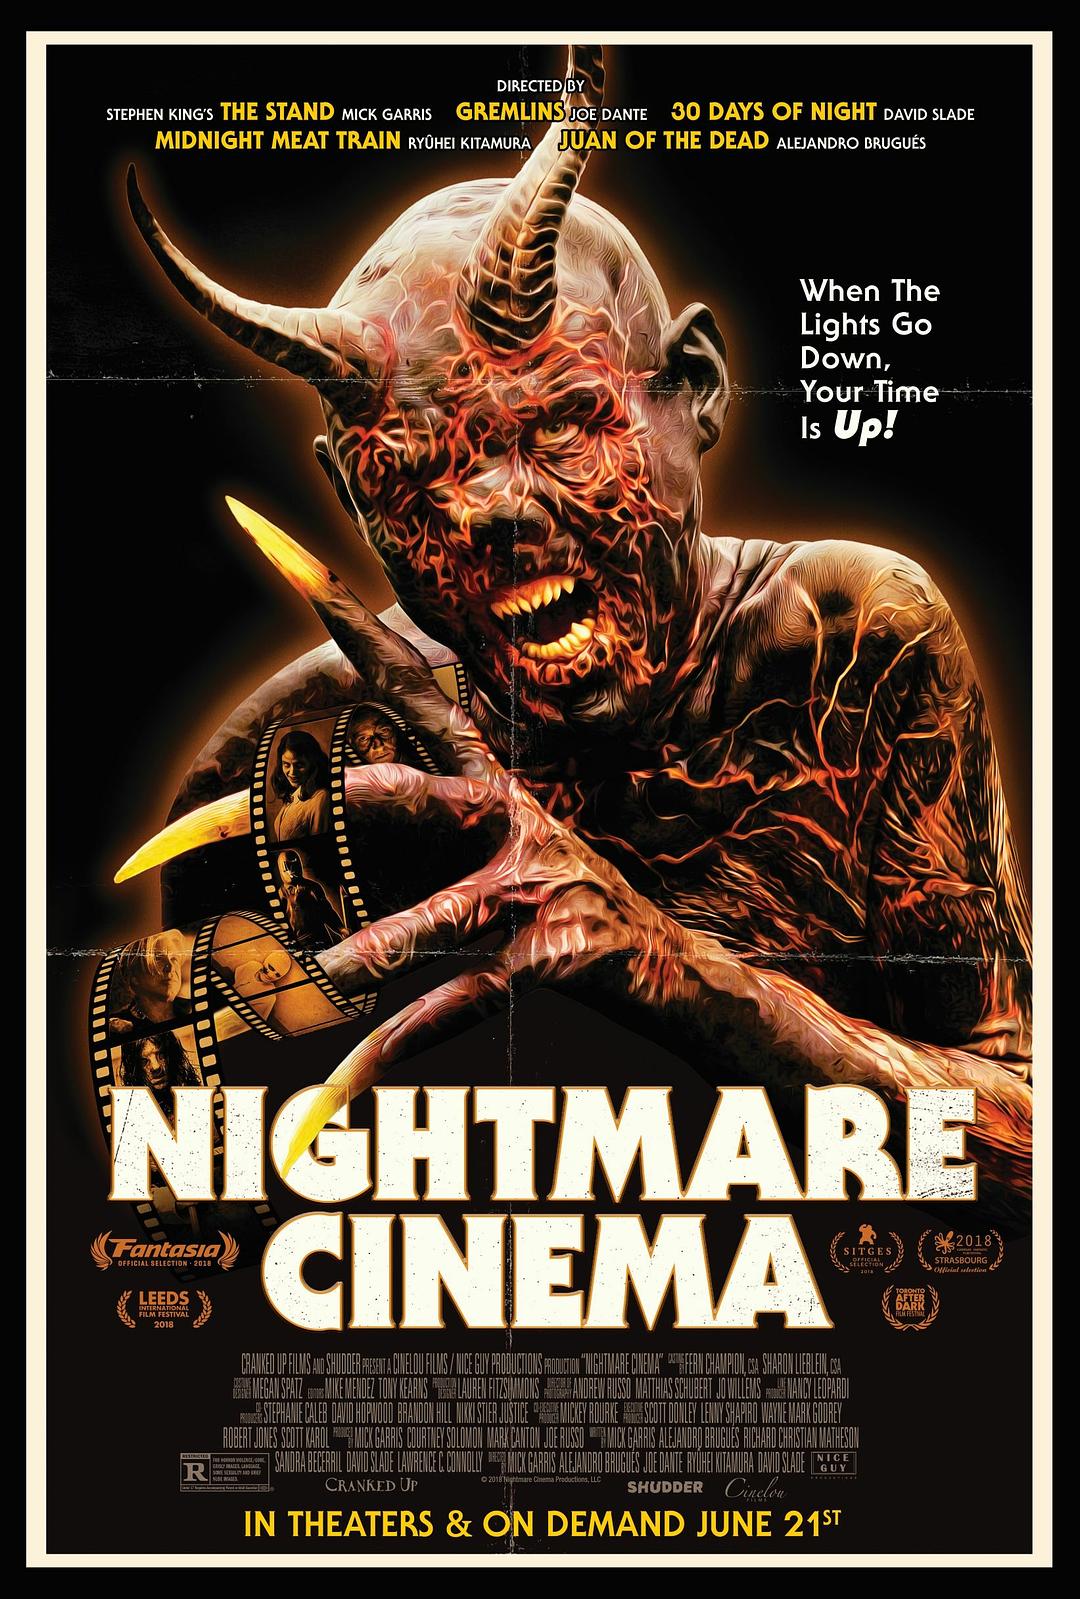 噩梦电影/噩梦电影院 Nightmare.Cinema.2018.1080p.WEB-DL.DD5.1.H264-FGT 4.54GB-1.png